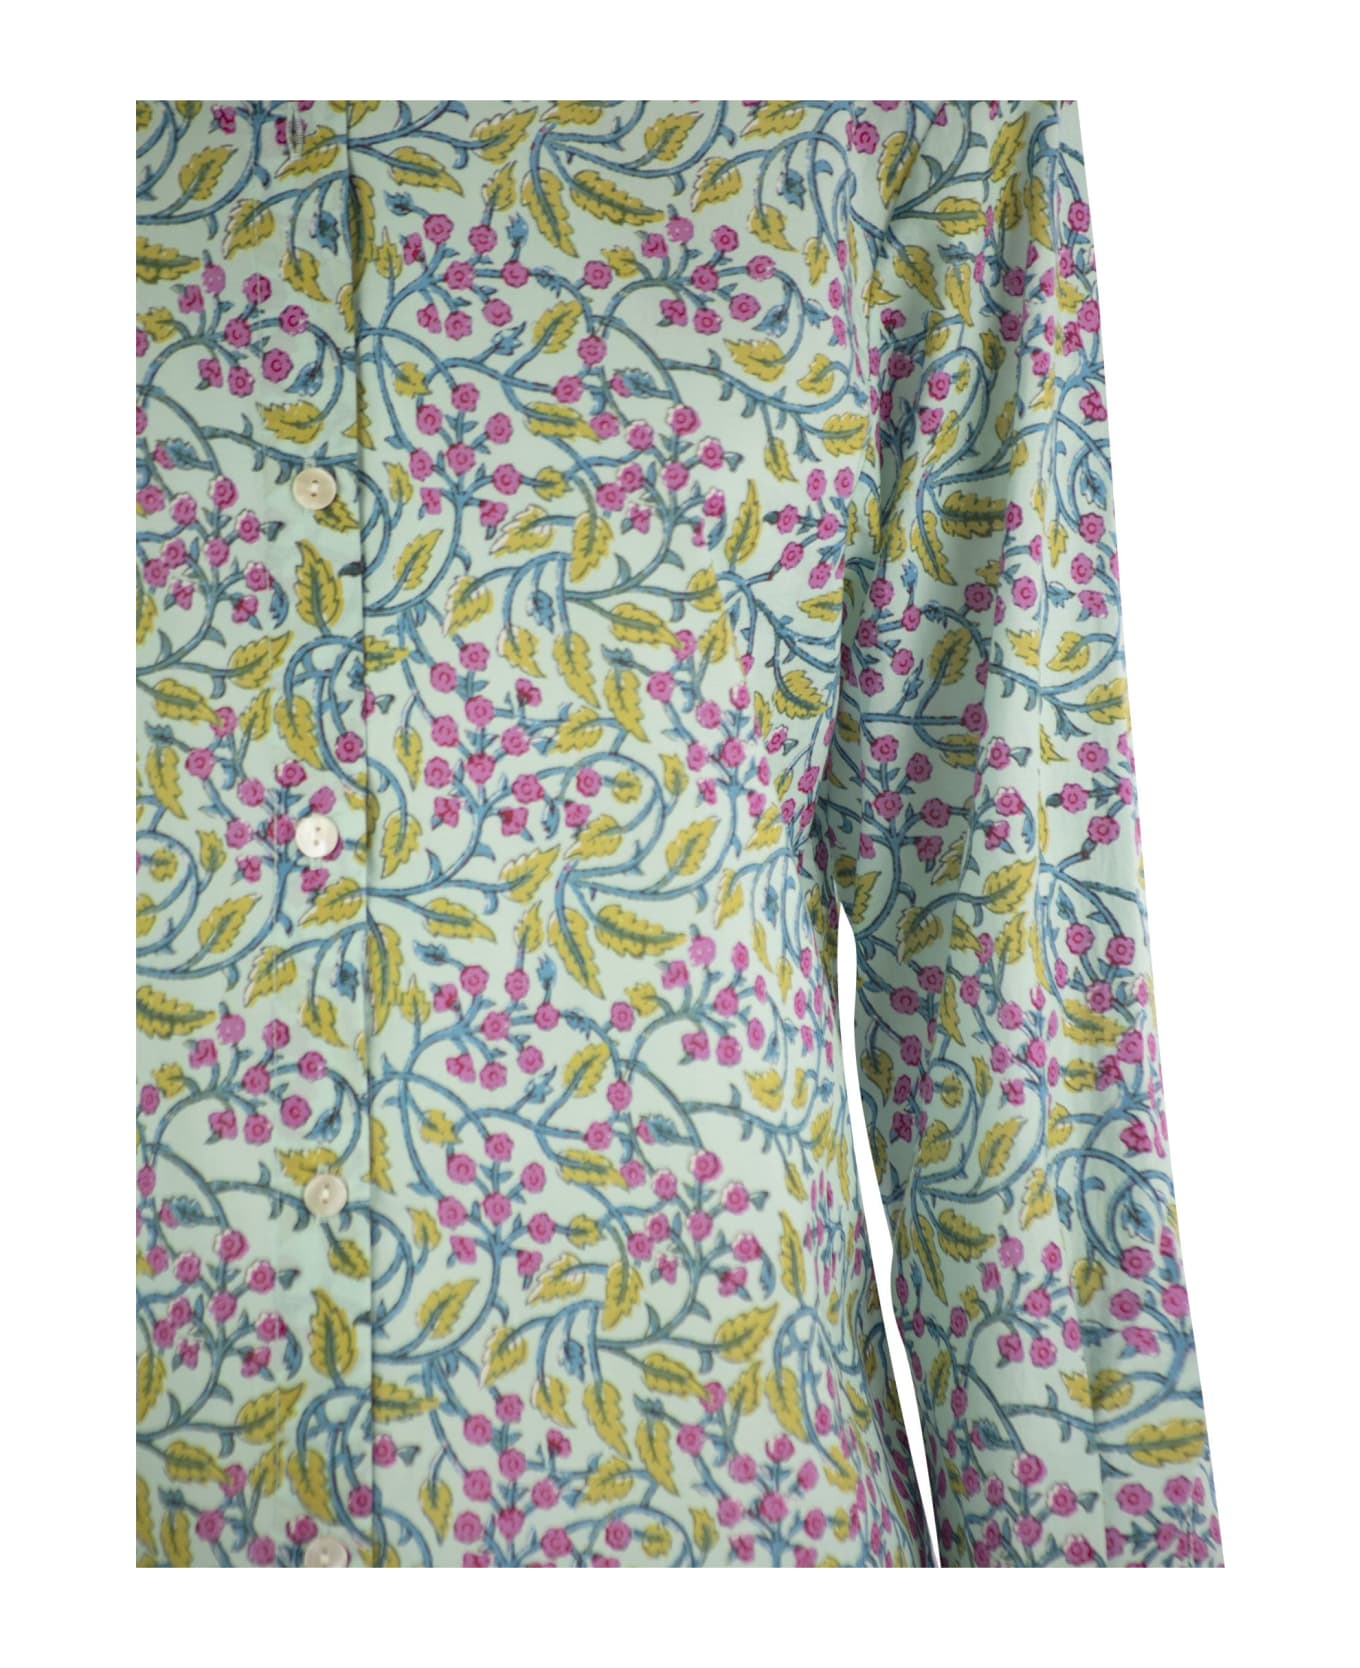 MC2 Saint Barth Brigitte - Shirt With Flower Pattern Shirt - MULTI